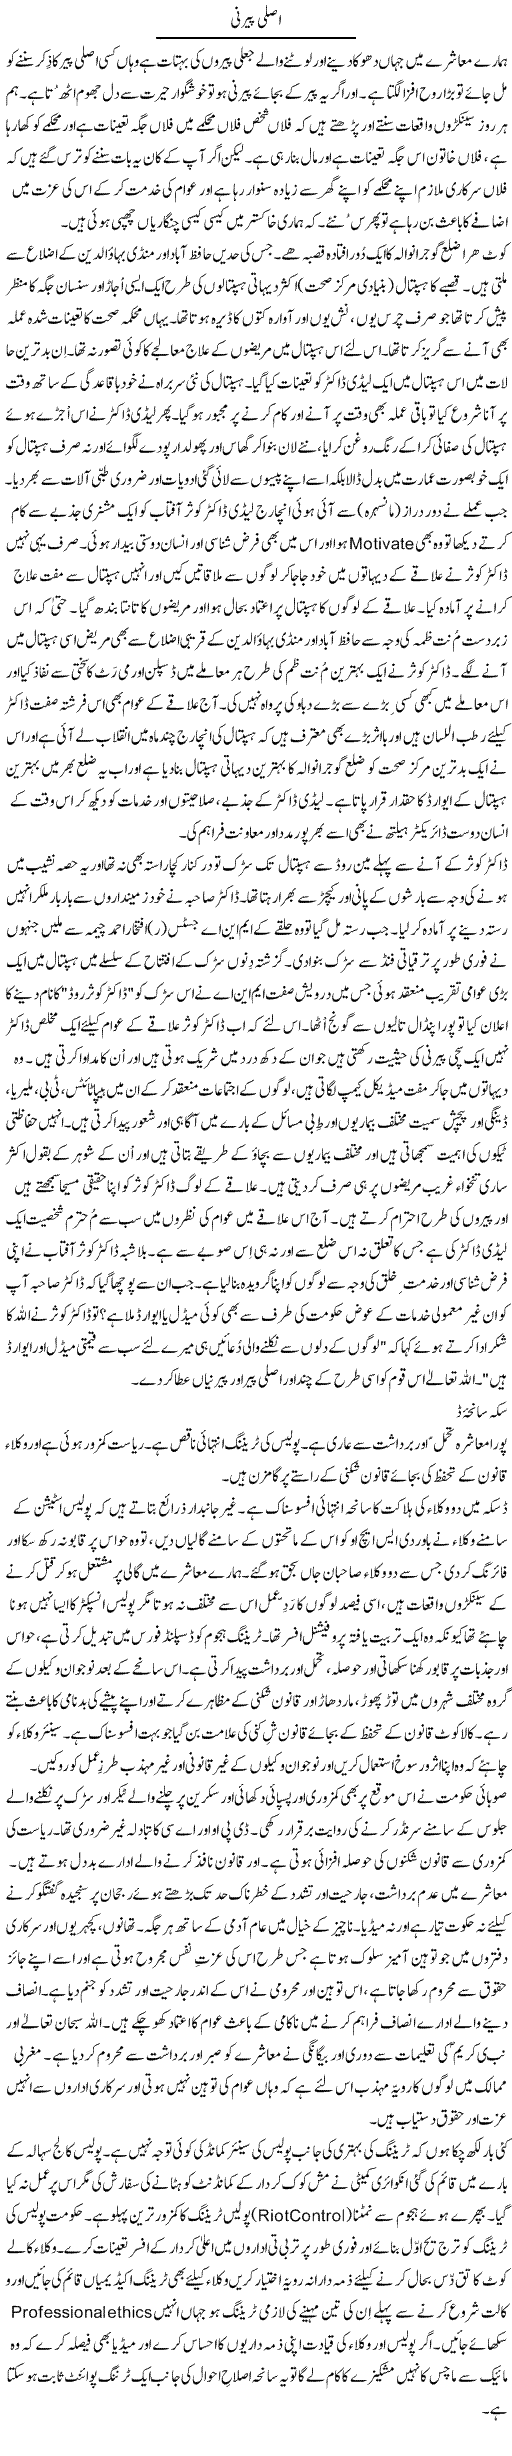 Asli Peerni | Zulfiqar Ahmed Cheema | Daily Urdu Columns